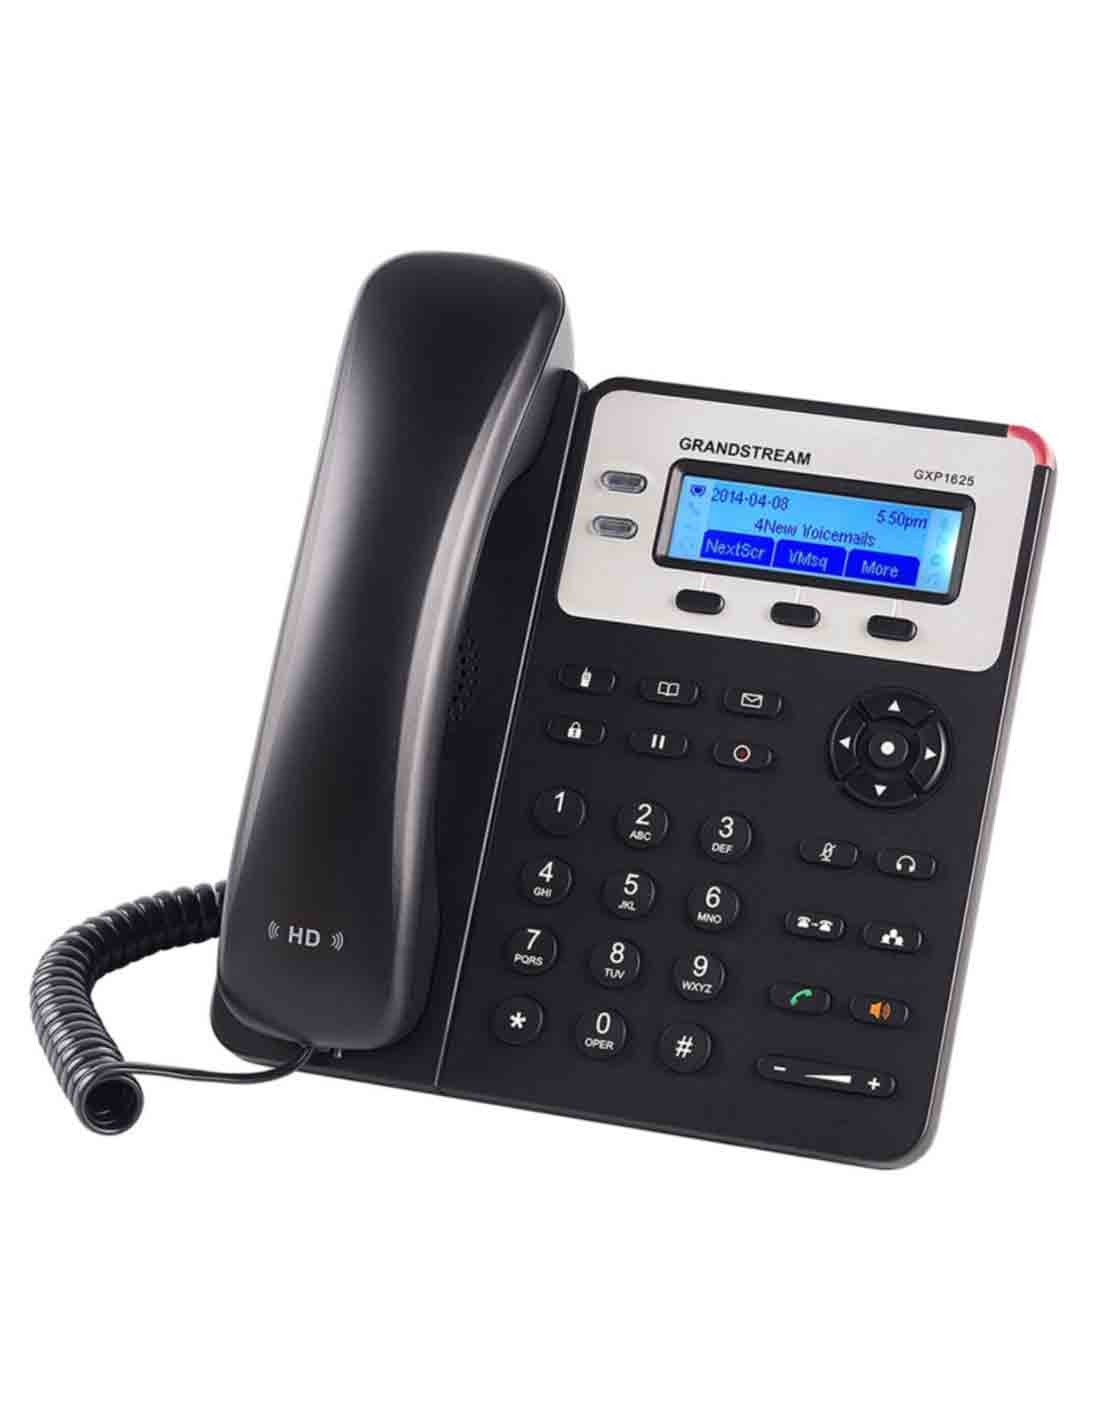 Grandstream GXP1625 IP Phone Dubai Online Store